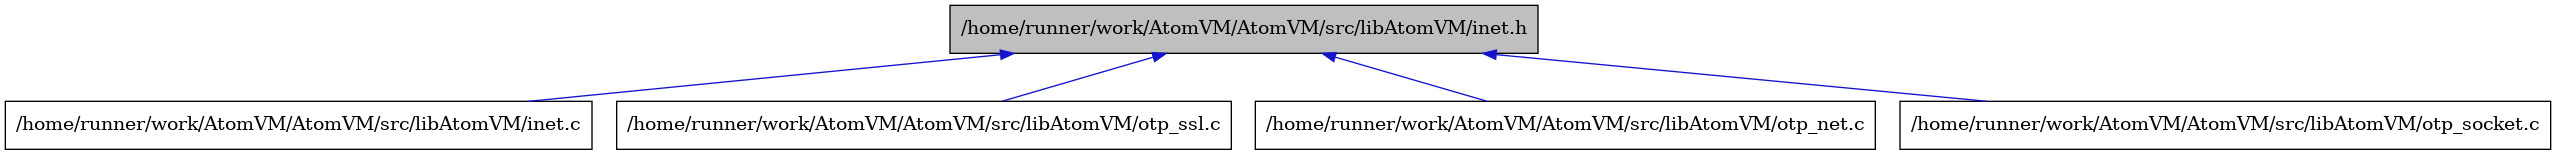 digraph {
    graph [bgcolor="#00000000"]
    node [shape=rectangle style=filled fillcolor="#FFFFFF" font=Helvetica padding=2]
    edge [color="#1414CE"]
    "2" [label="/home/runner/work/AtomVM/AtomVM/src/libAtomVM/inet.c" tooltip="/home/runner/work/AtomVM/AtomVM/src/libAtomVM/inet.c"]
    "1" [label="/home/runner/work/AtomVM/AtomVM/src/libAtomVM/inet.h" tooltip="/home/runner/work/AtomVM/AtomVM/src/libAtomVM/inet.h" fillcolor="#BFBFBF"]
    "5" [label="/home/runner/work/AtomVM/AtomVM/src/libAtomVM/otp_ssl.c" tooltip="/home/runner/work/AtomVM/AtomVM/src/libAtomVM/otp_ssl.c"]
    "3" [label="/home/runner/work/AtomVM/AtomVM/src/libAtomVM/otp_net.c" tooltip="/home/runner/work/AtomVM/AtomVM/src/libAtomVM/otp_net.c"]
    "4" [label="/home/runner/work/AtomVM/AtomVM/src/libAtomVM/otp_socket.c" tooltip="/home/runner/work/AtomVM/AtomVM/src/libAtomVM/otp_socket.c"]
    "1" -> "2" [dir=back tooltip="include"]
    "1" -> "3" [dir=back tooltip="include"]
    "1" -> "4" [dir=back tooltip="include"]
    "1" -> "5" [dir=back tooltip="include"]
}